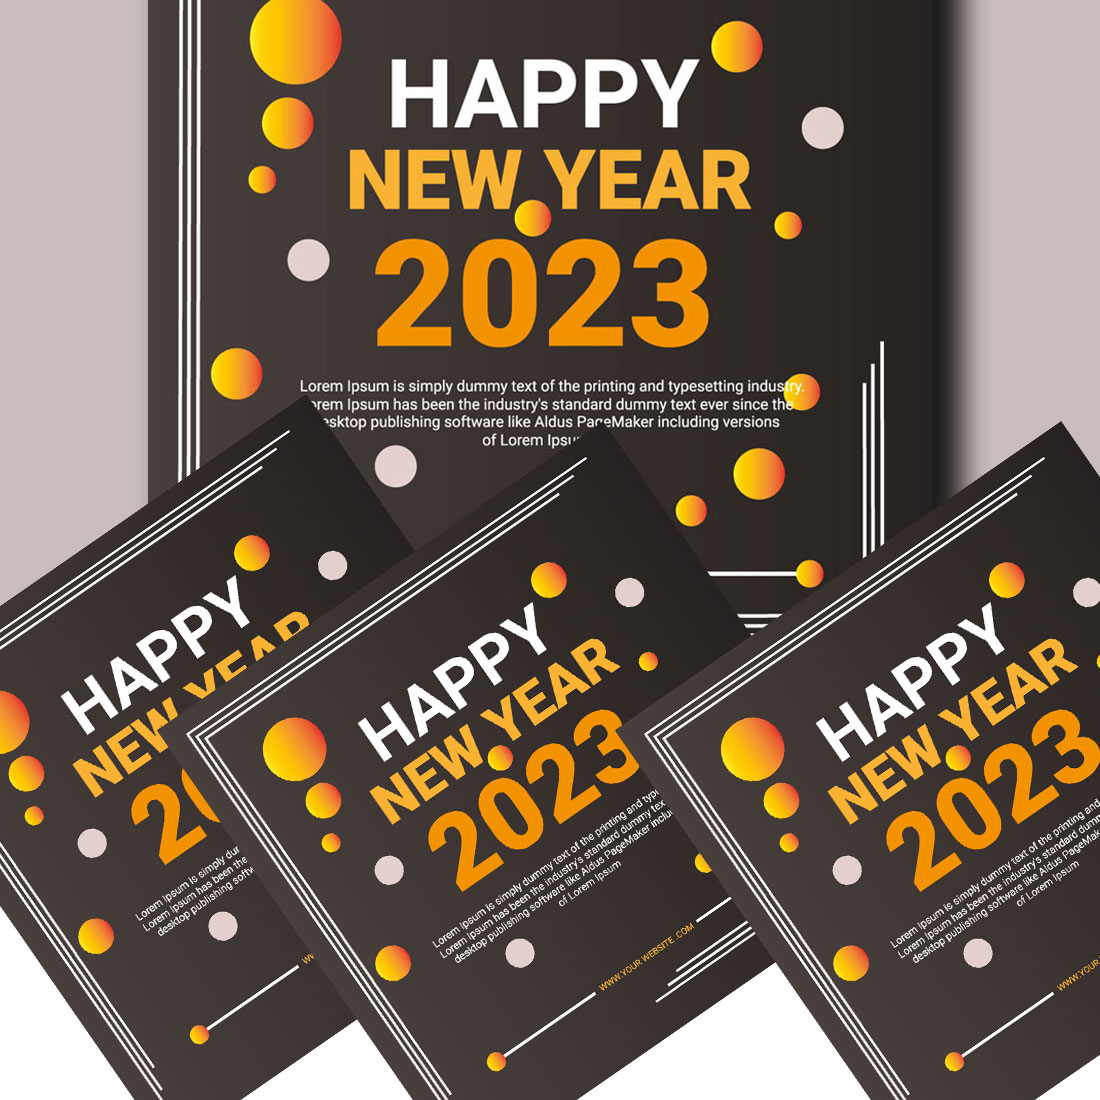 Happy New Year 2023 Social Media Post Template Design presentation.